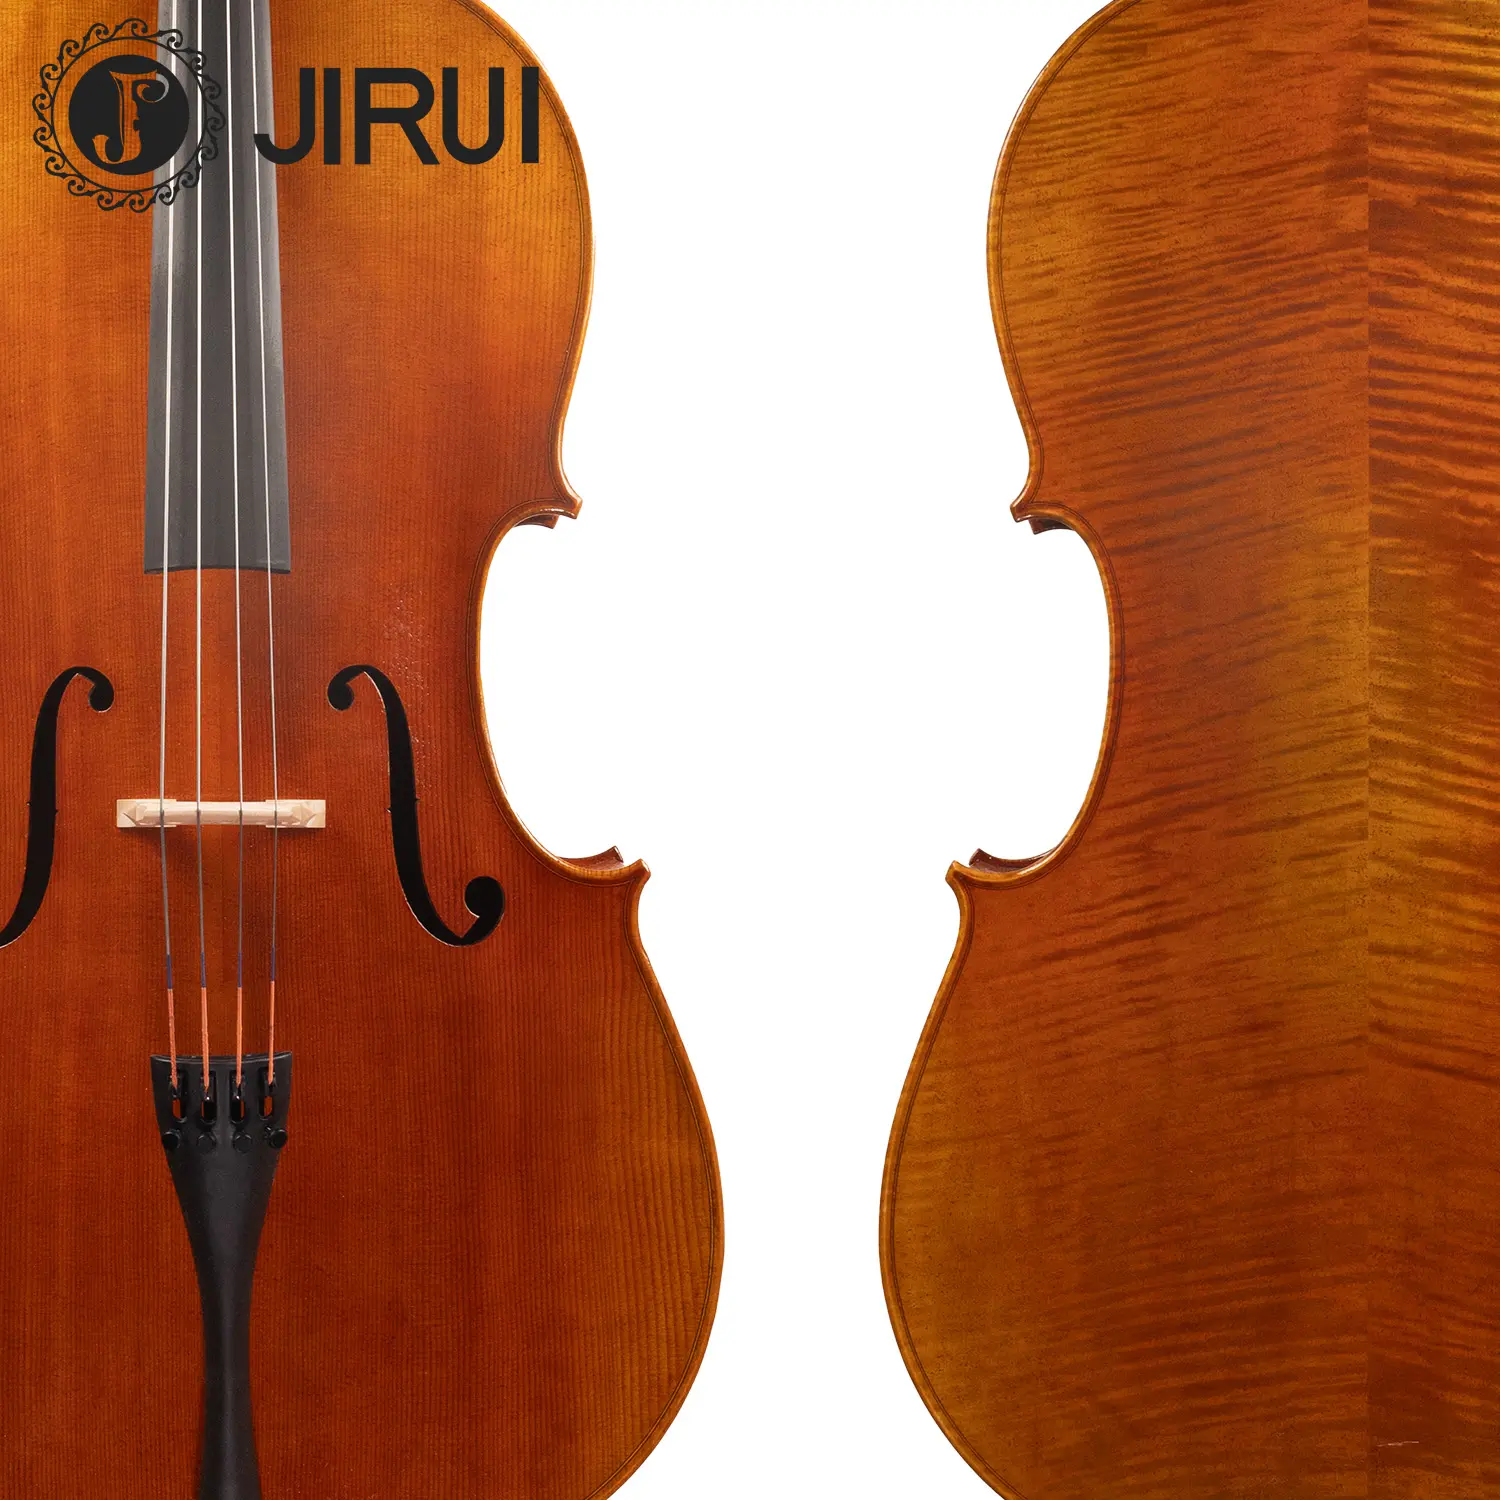 Venta superior de alta calidad violonchelo hecho a mano de madera de Brasil violonchelo Arce flameado violonchelo europeo avanzado 4/4 A + estilo antiguo ámbar dorado